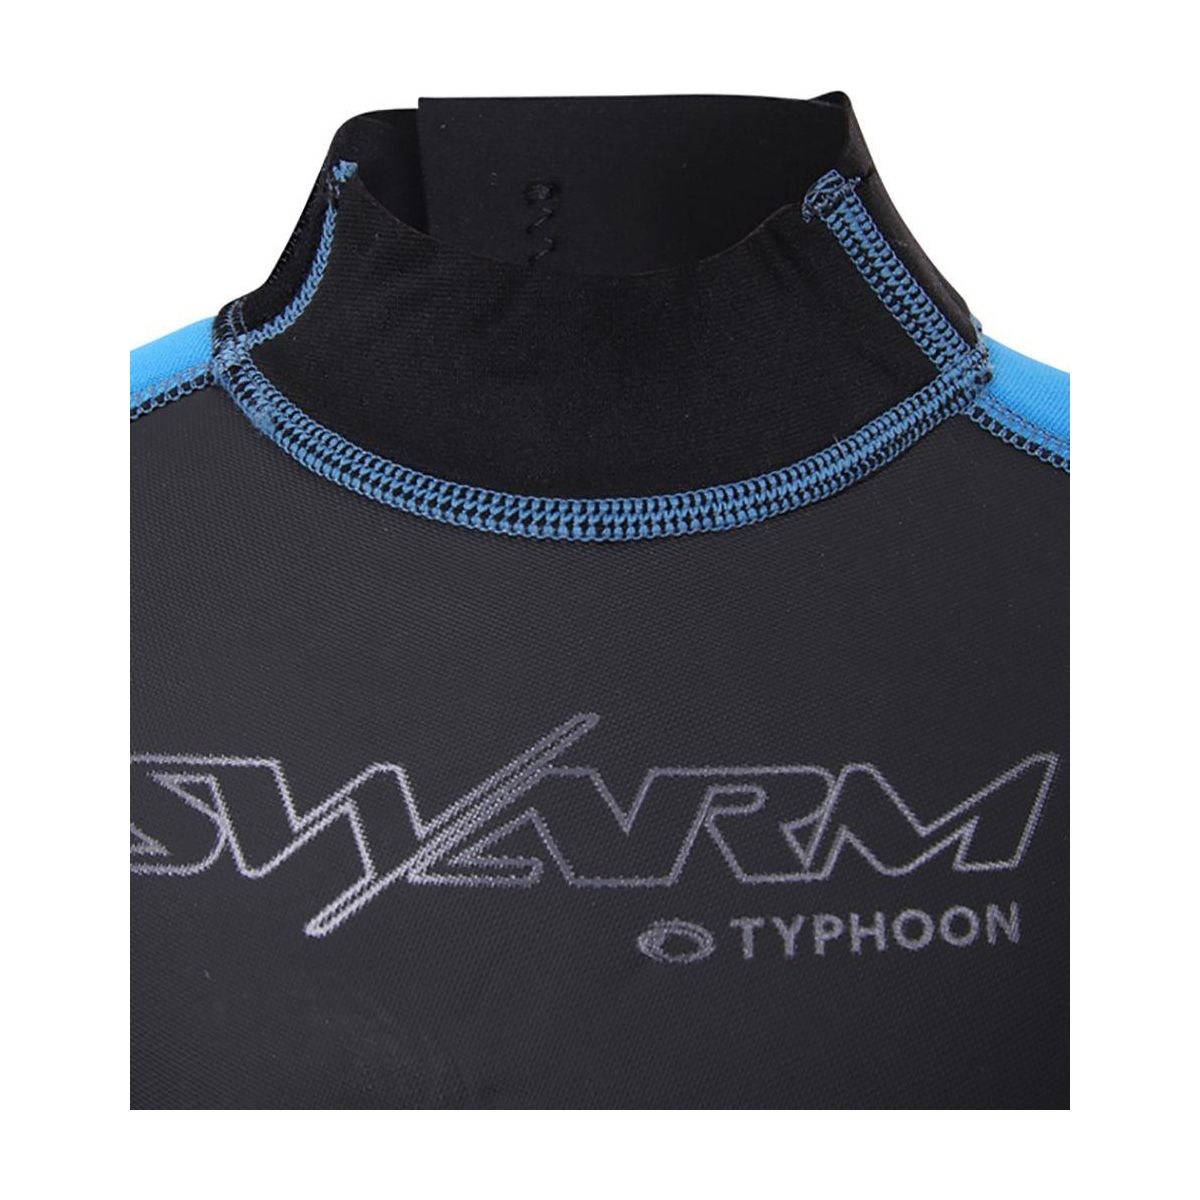 Typhoon Swarm Infant Shorty Wetsuit Steel Blue Black